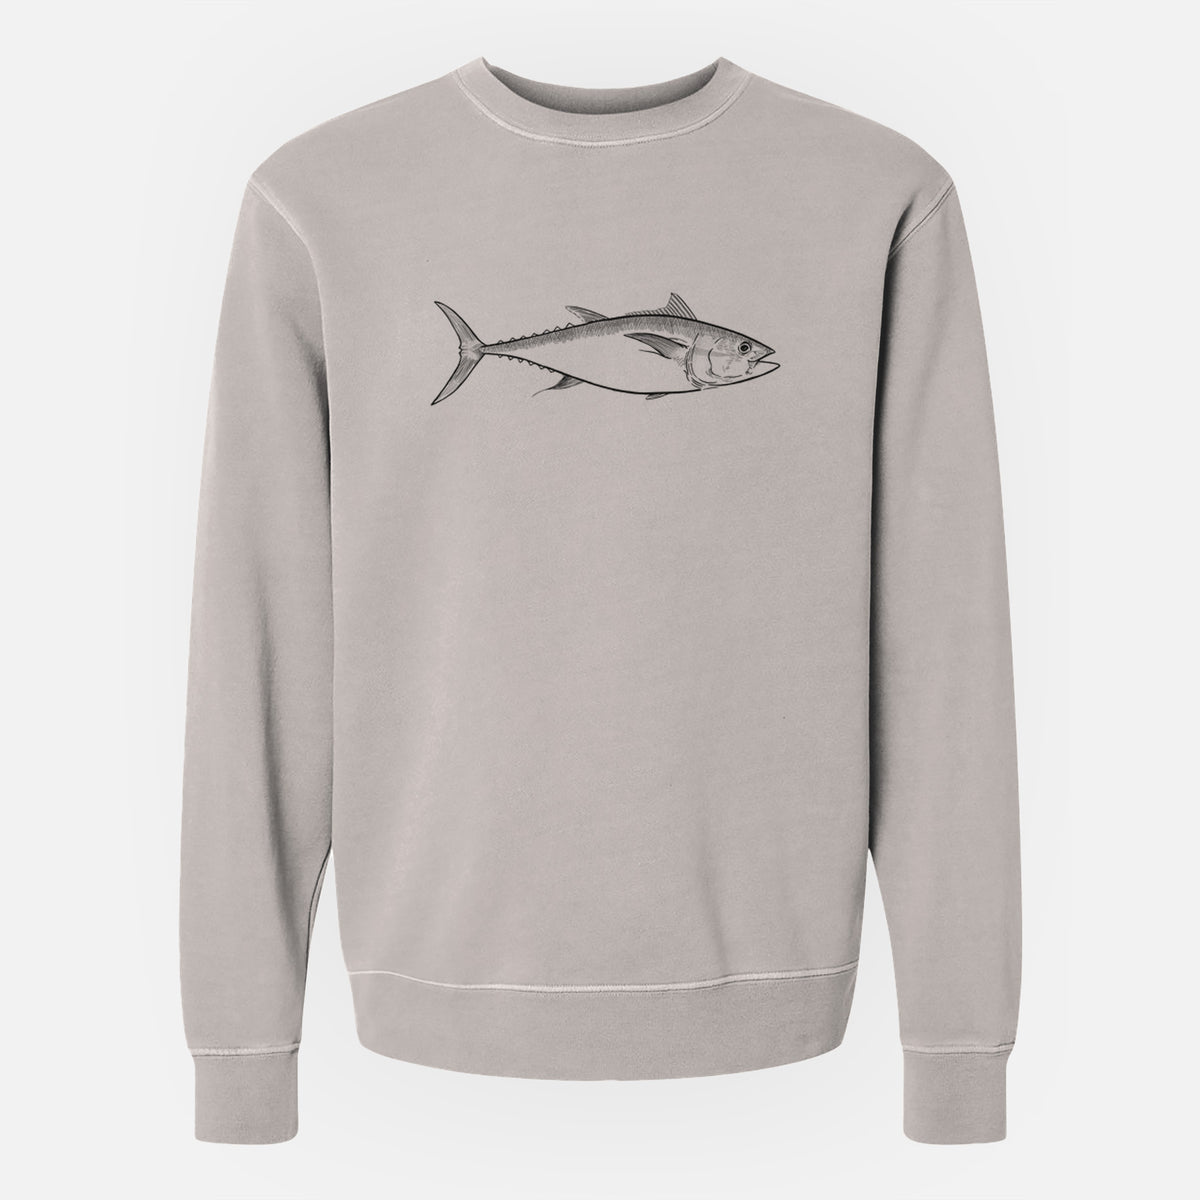 Atlantic Bluefin Tuna - Thunnus thynnus - Unisex Pigment Dyed Crew Sweatshirt